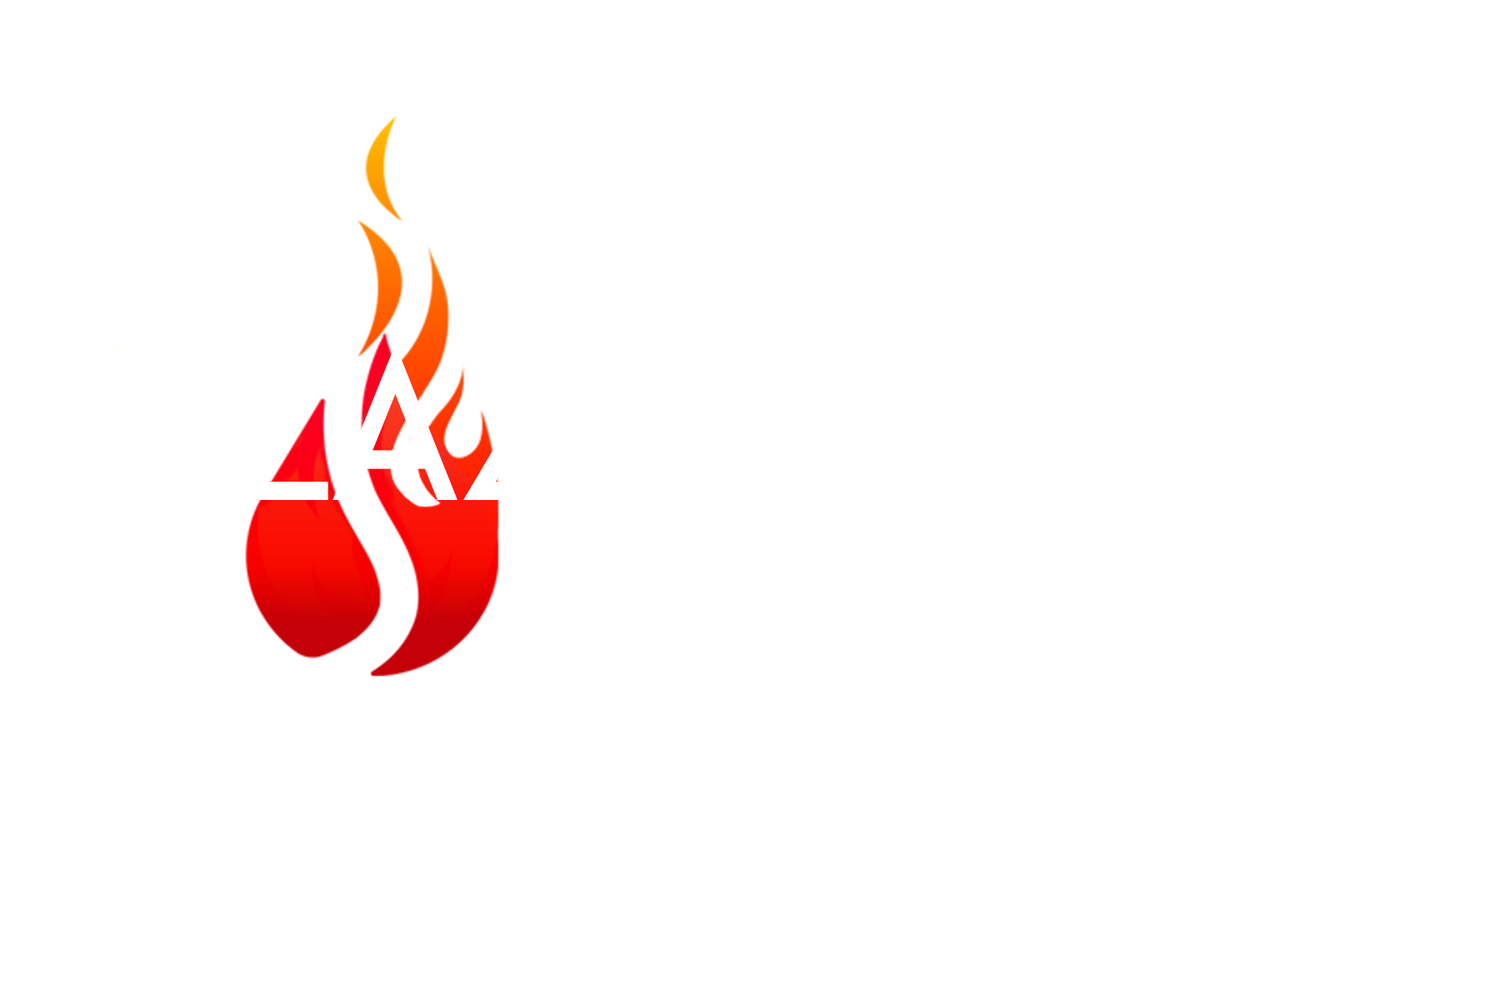 Blaze A Trail Canine